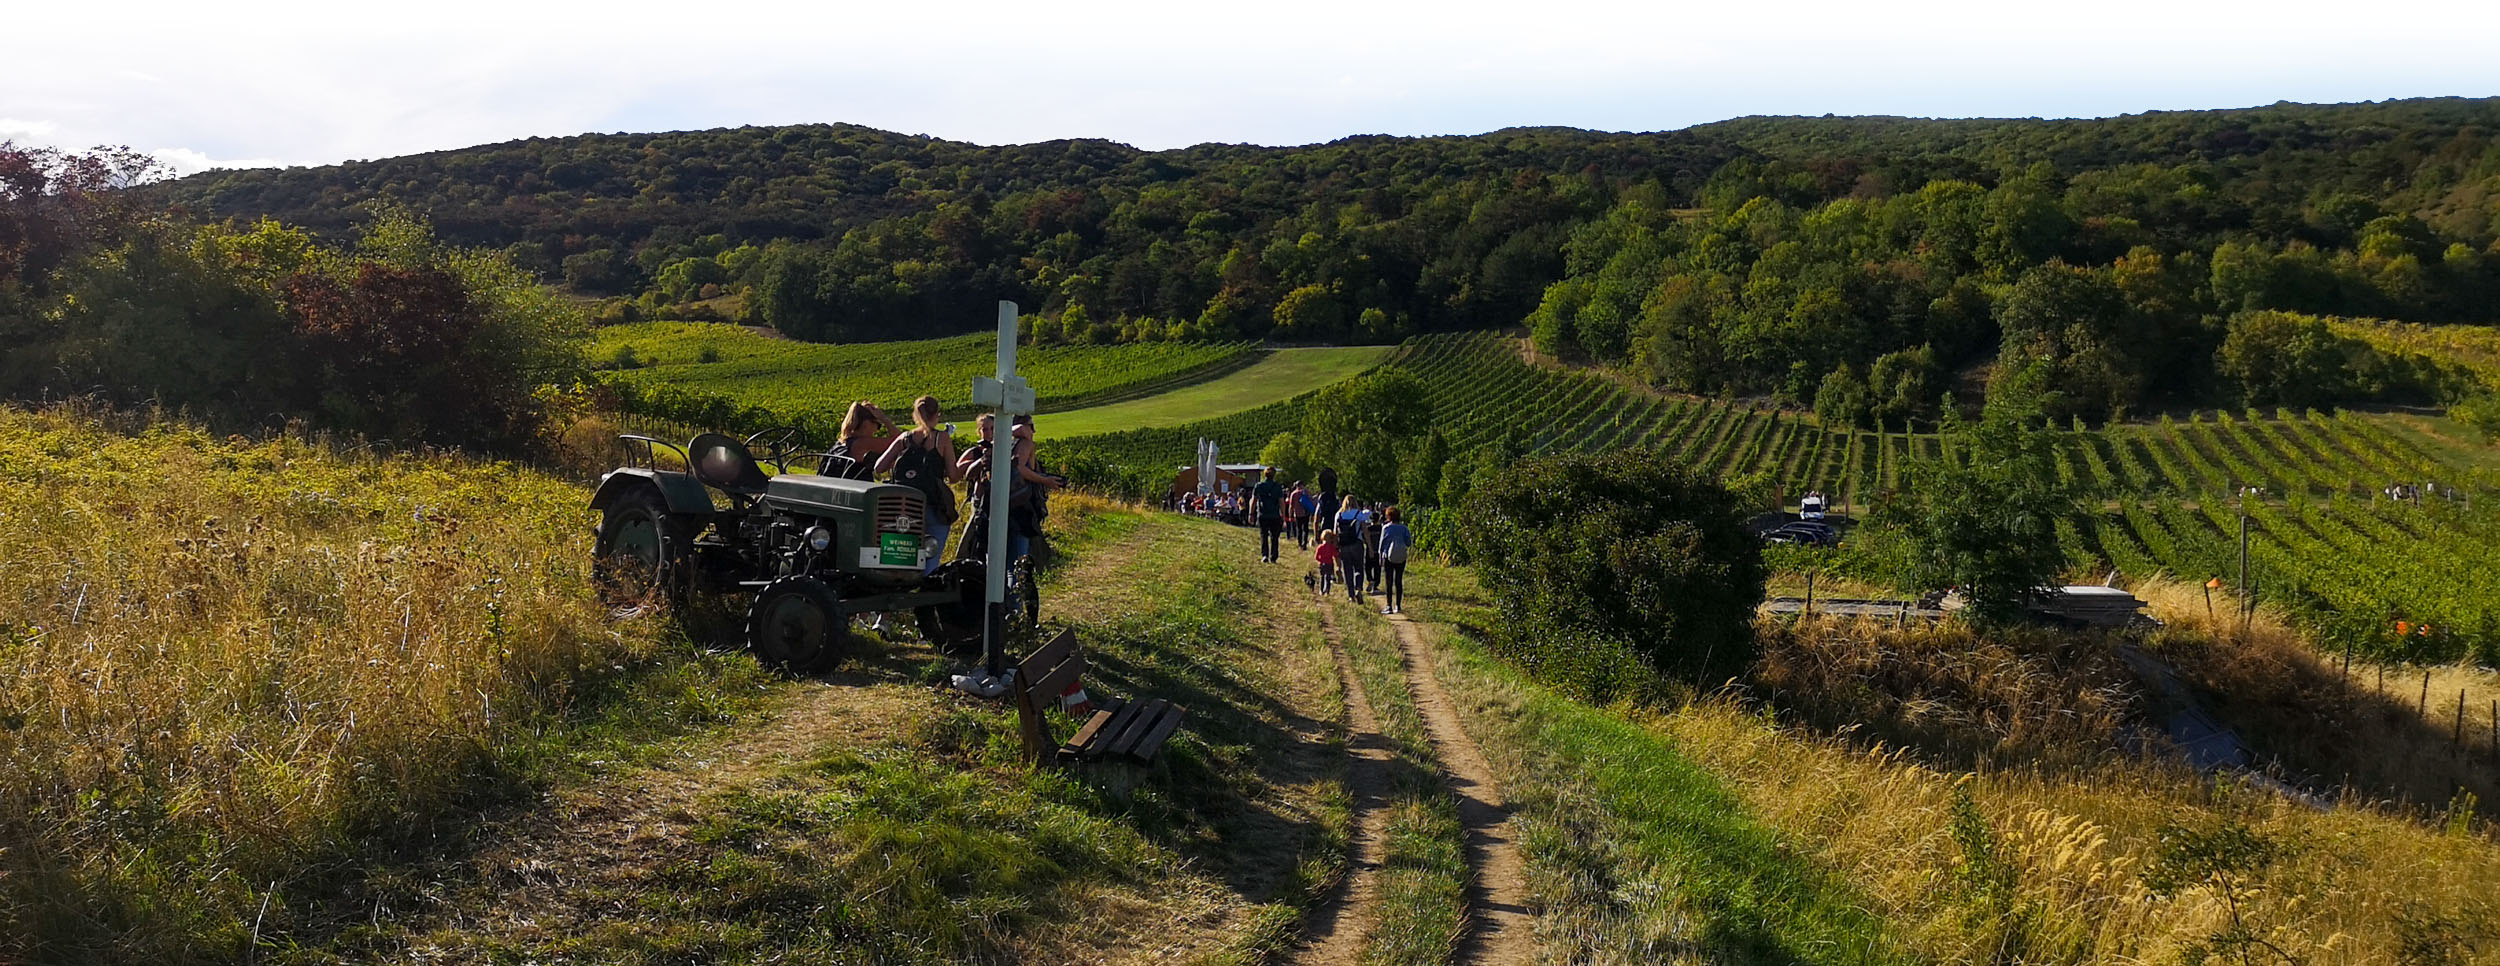 Tractor in vineyards of Thermeregion, Austria